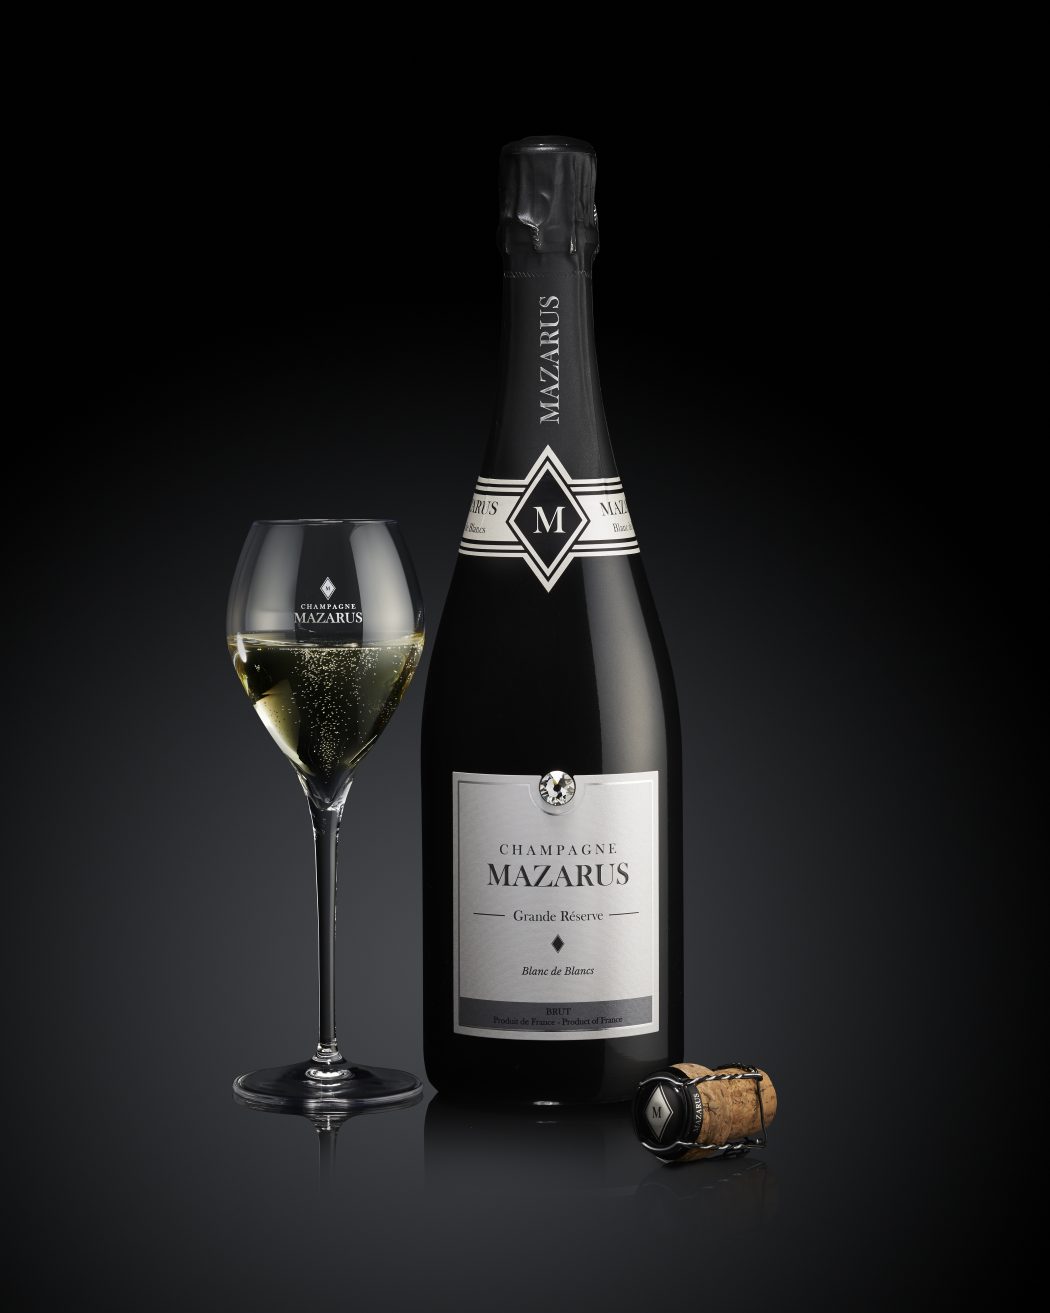 Mazarus Champagne - The Luxury Lifestyle Magazine